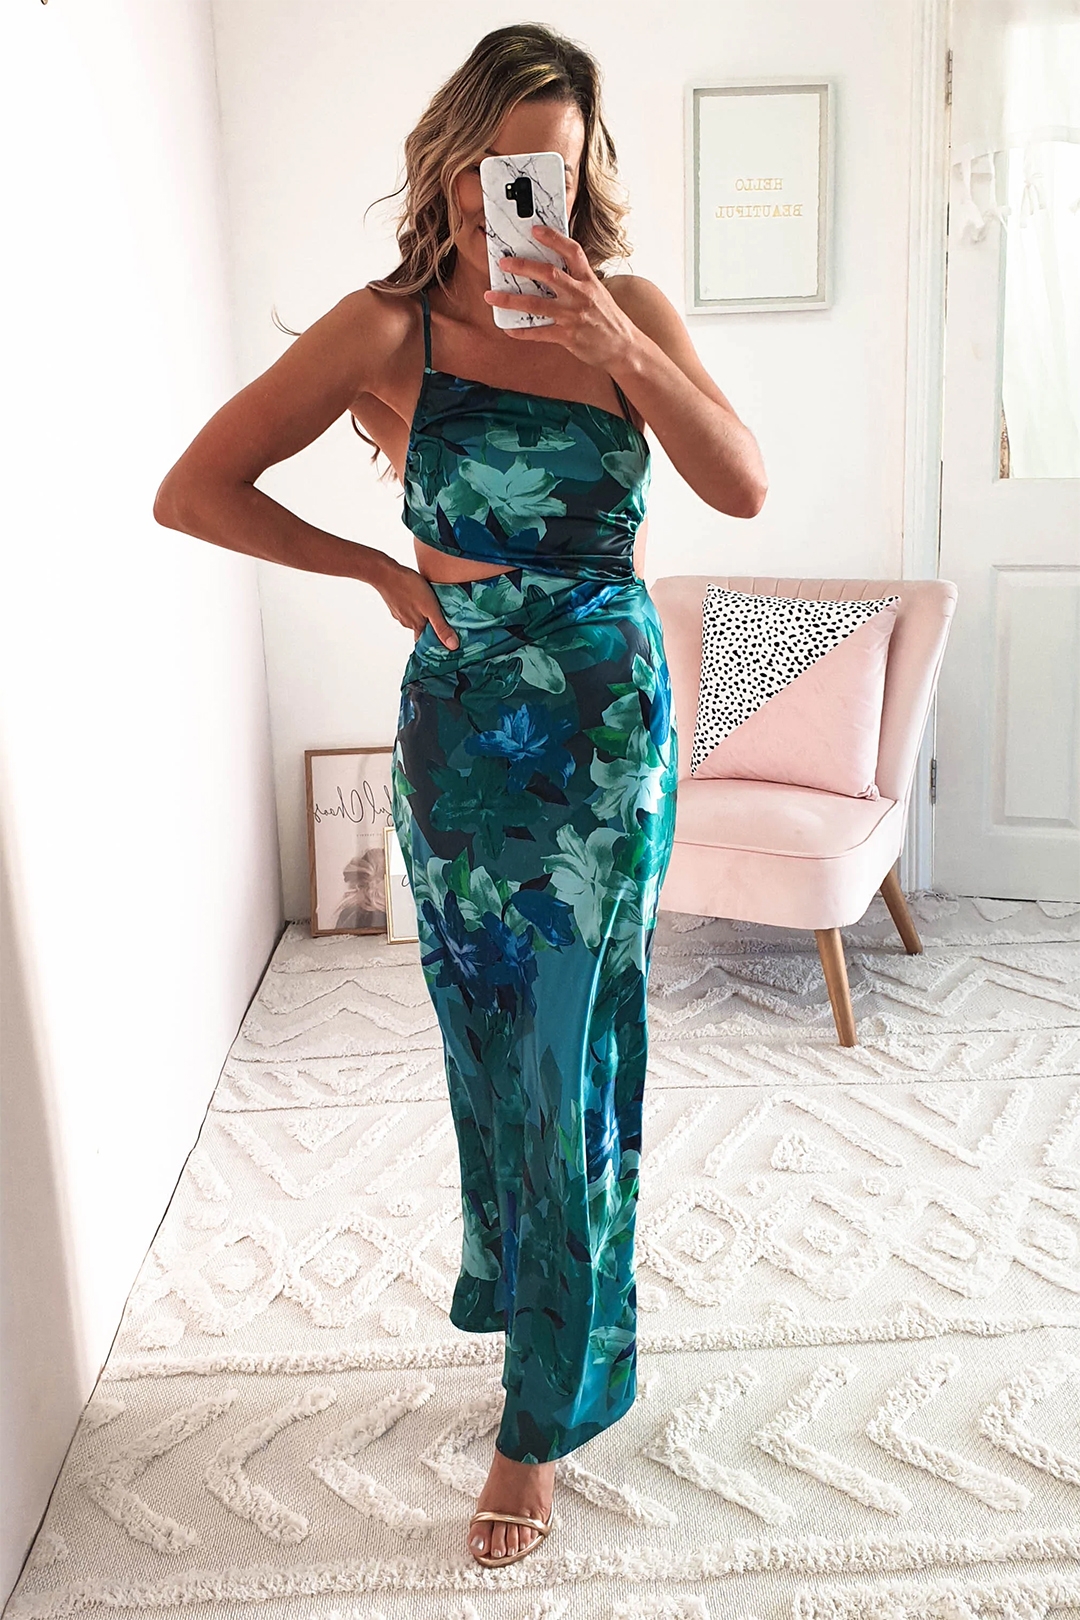 Toperth Green Print Halter Backless Midi Dress photo review